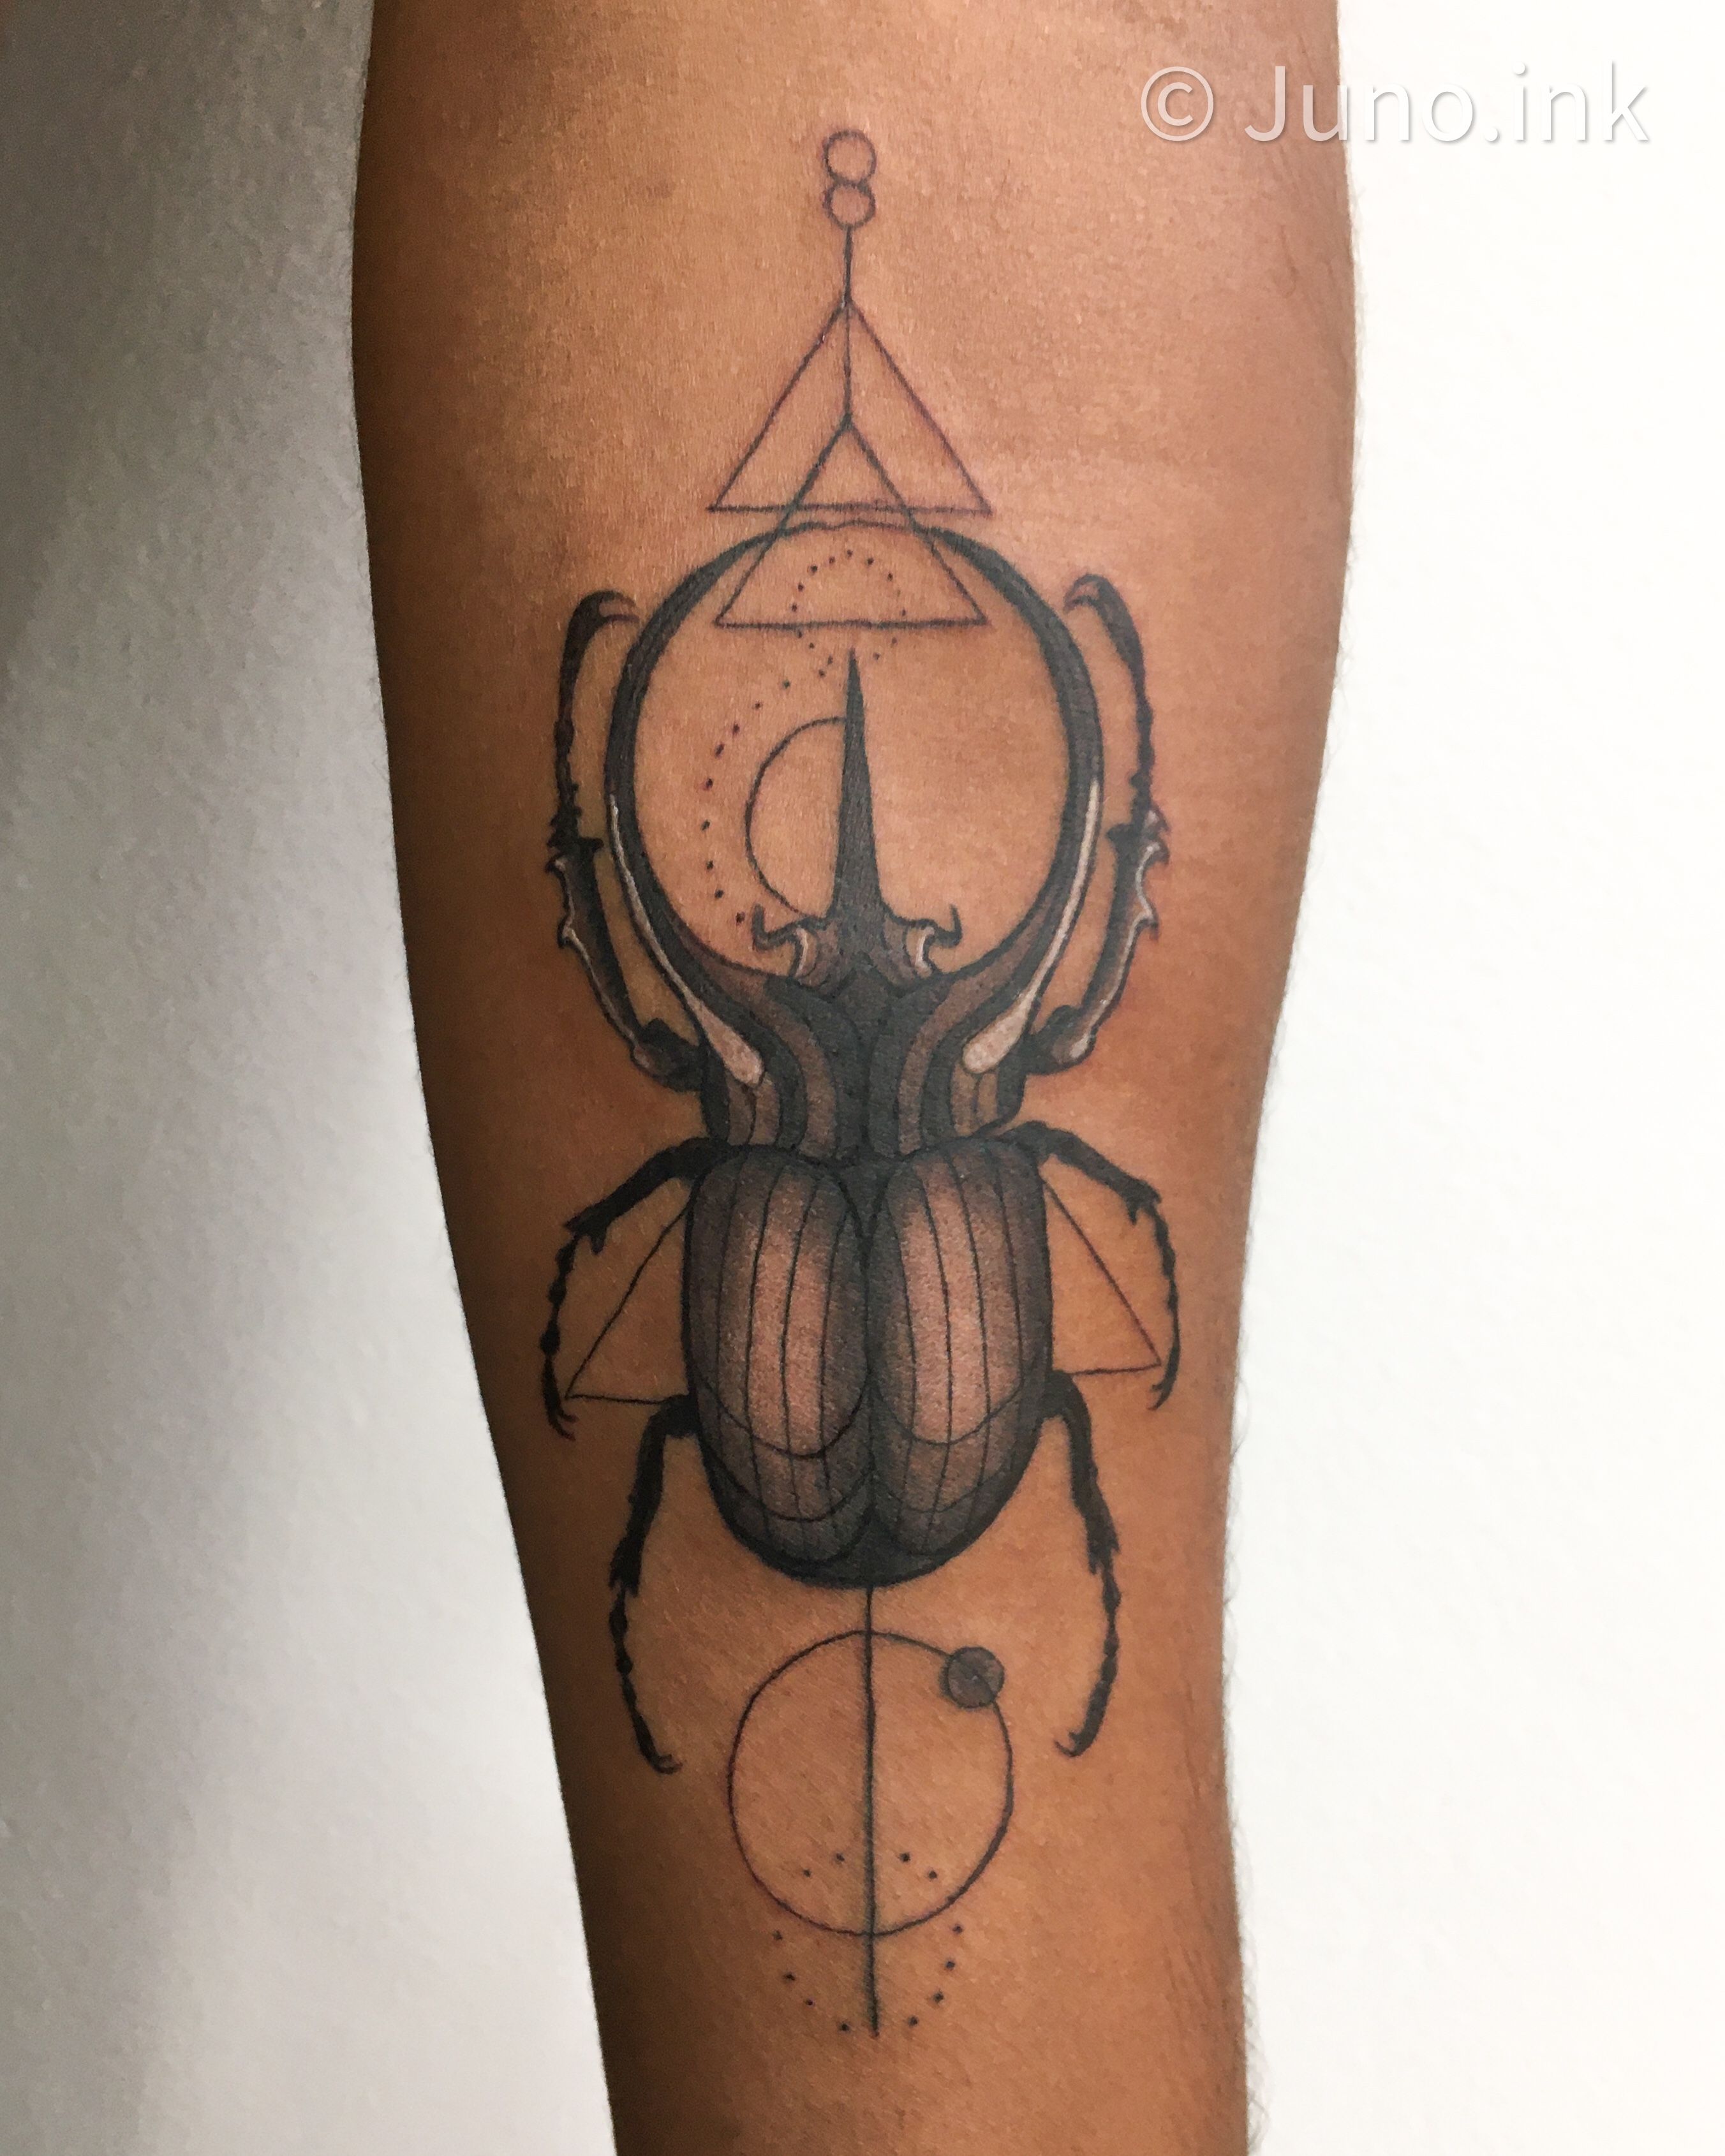 Beetle tattoo I did a few months ago. Austin, TX : r/tattoos